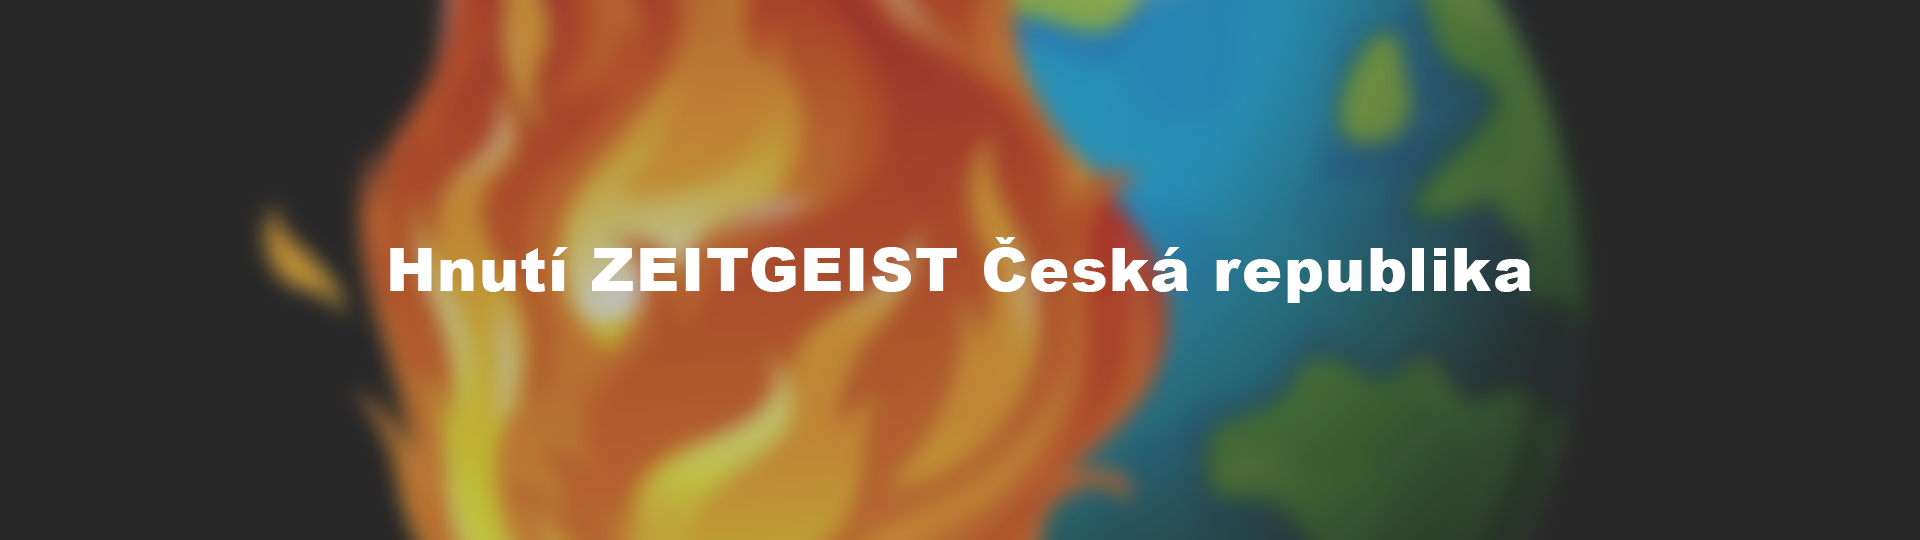 Hnutí Zeitgeist Česká republika